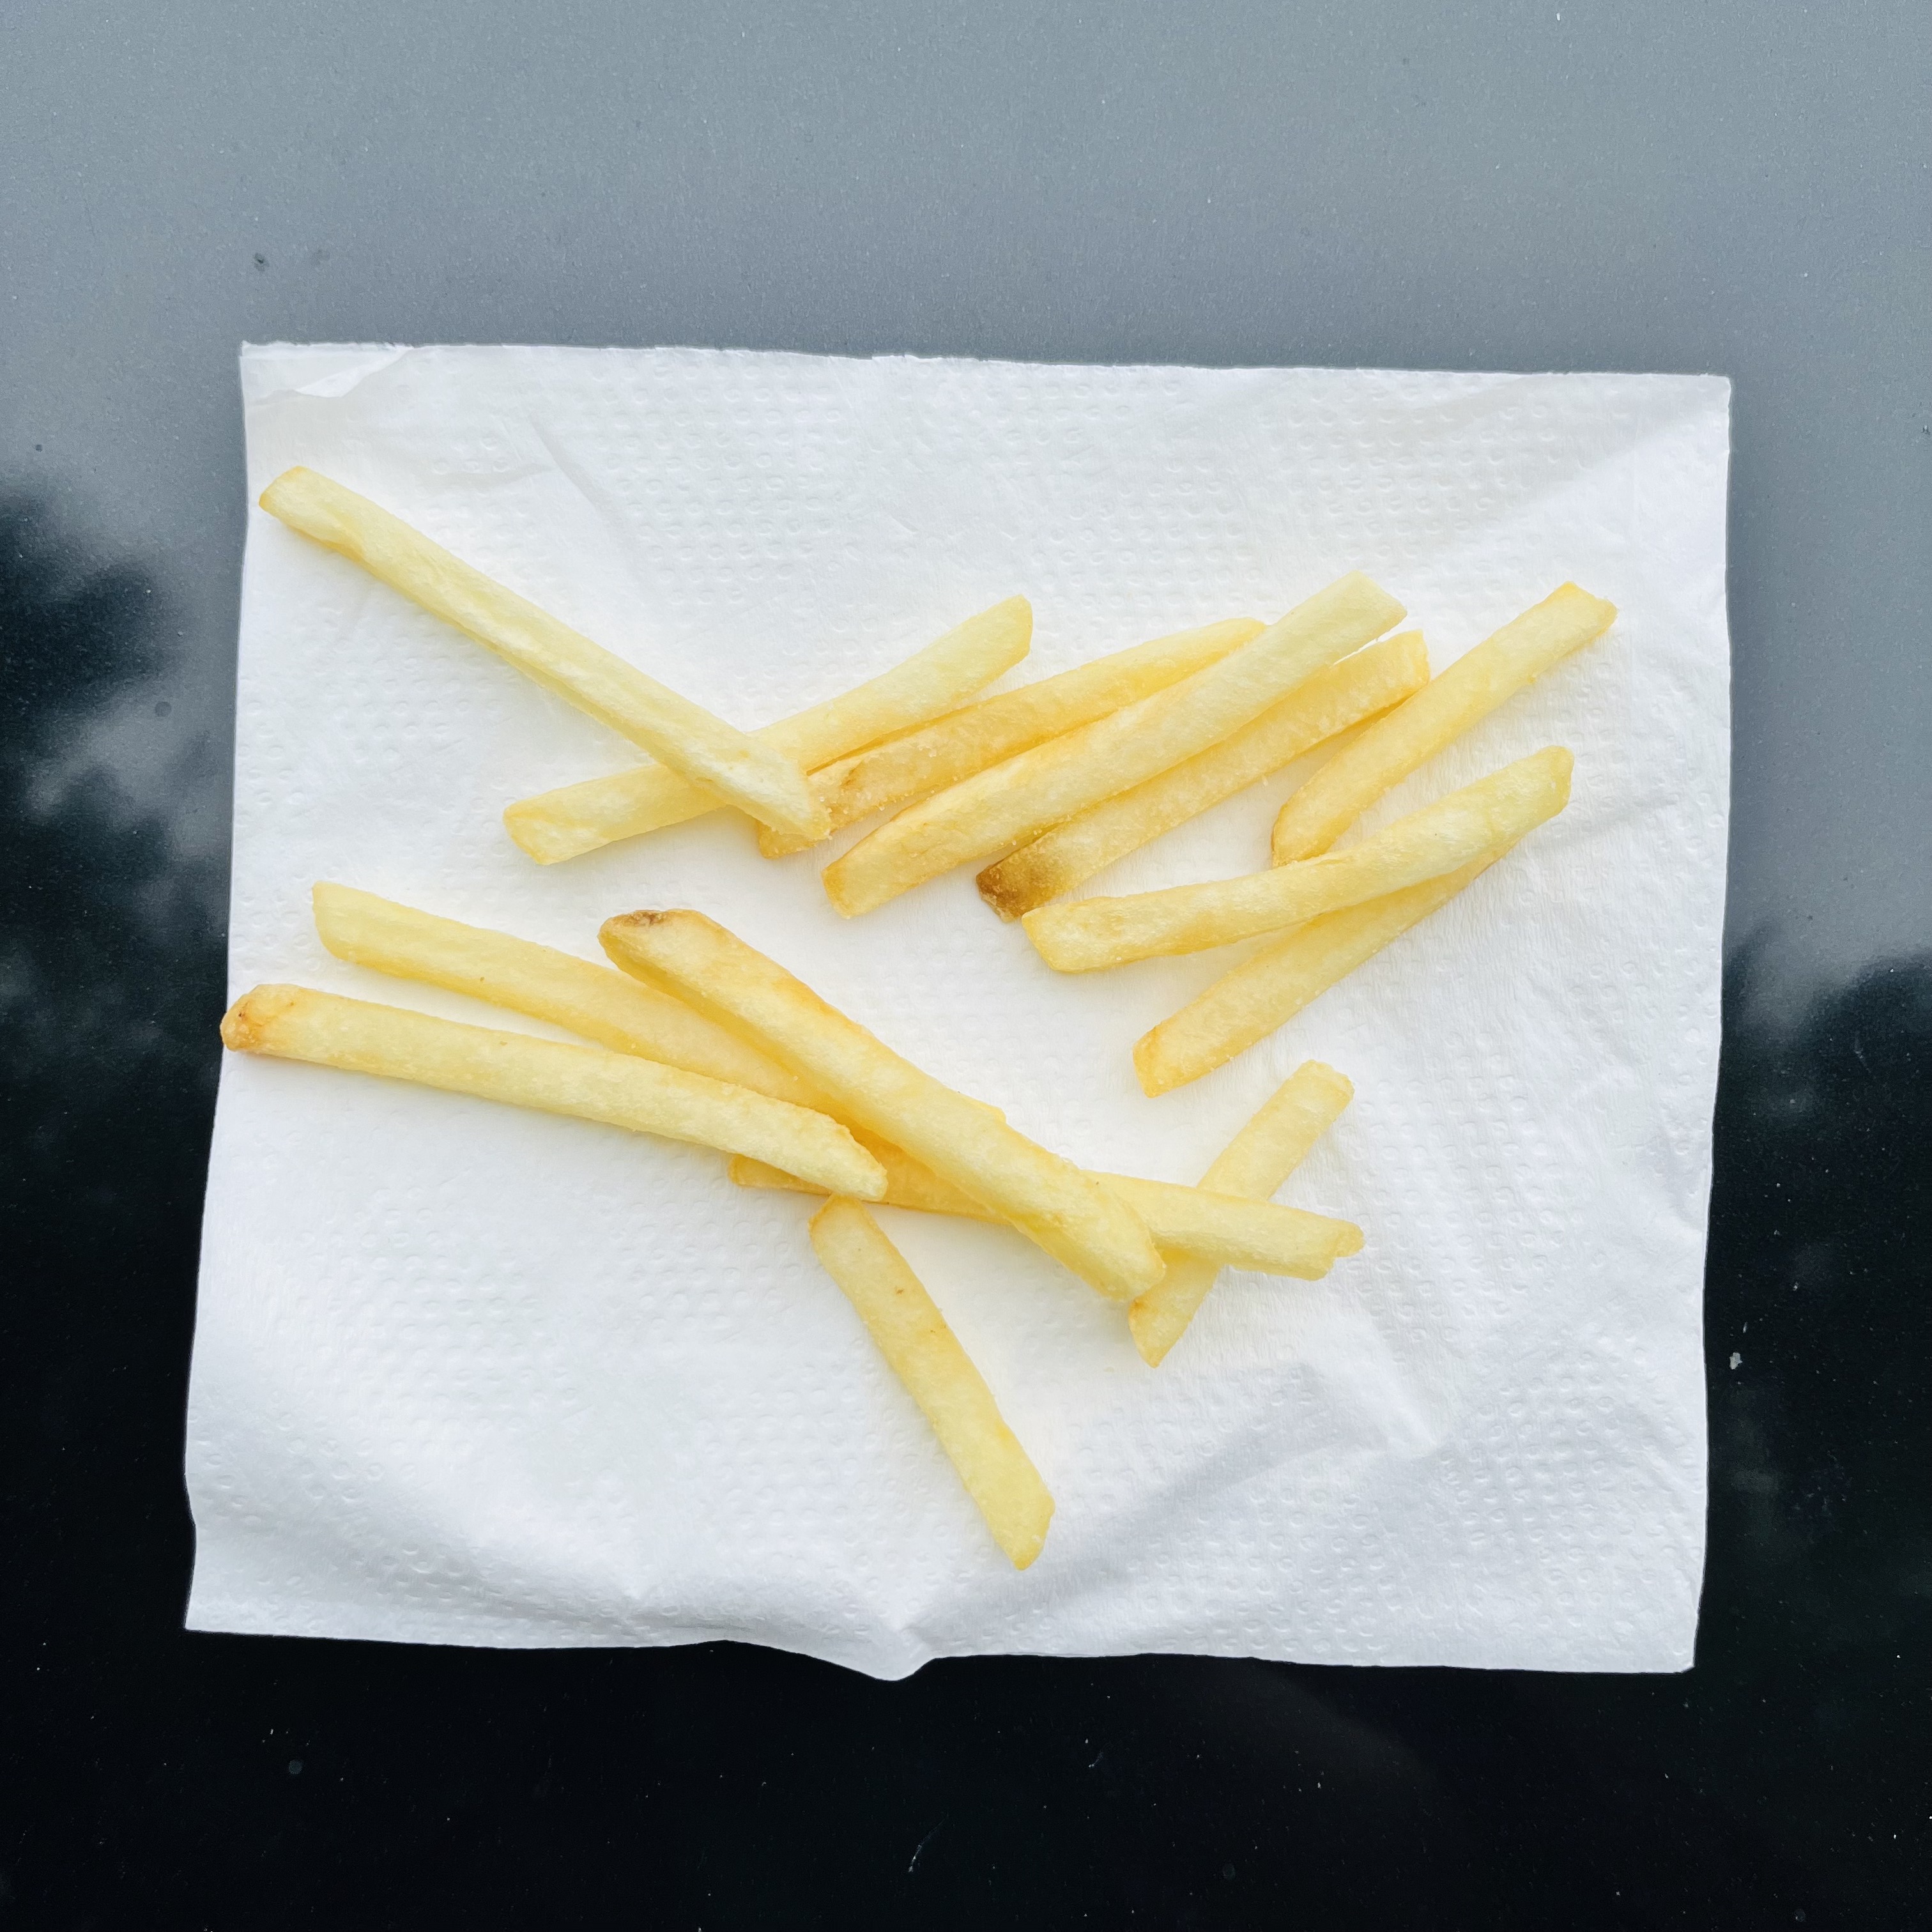 The Best Frozen French Fries: A Blind Taste Test